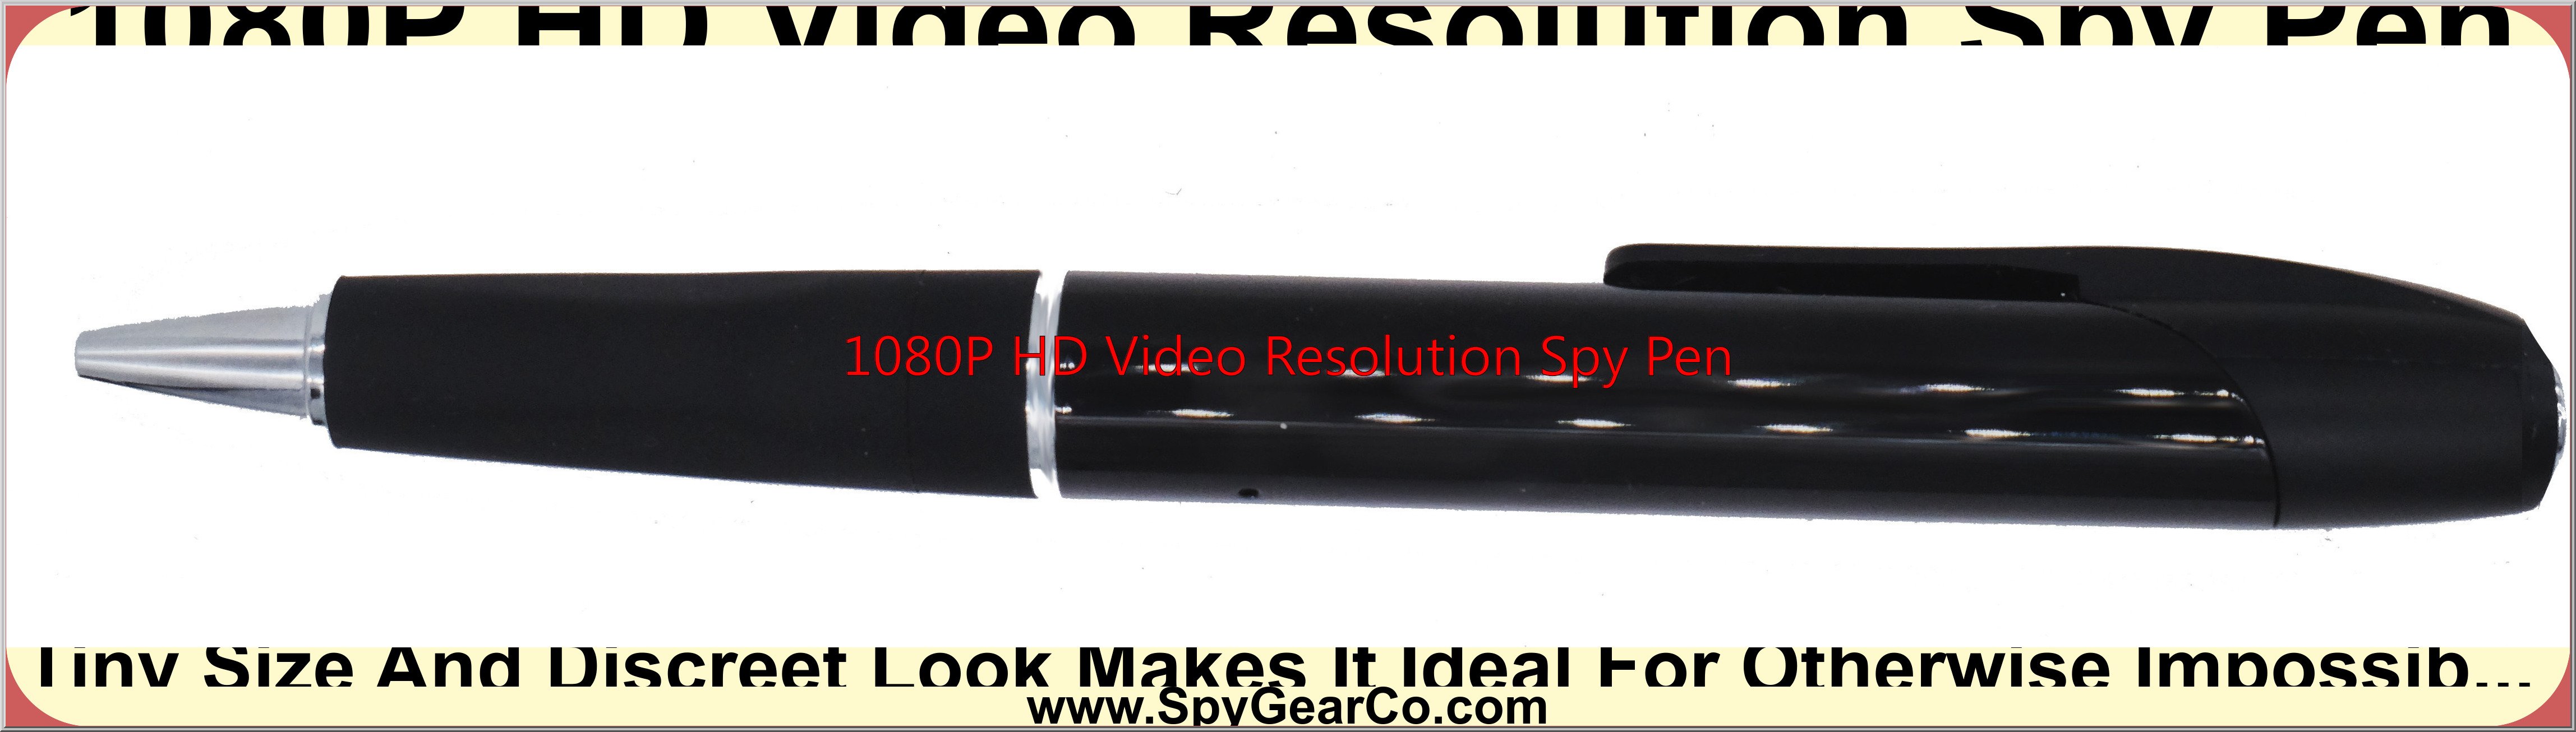 1080P HD Video Resolution Spy Pen